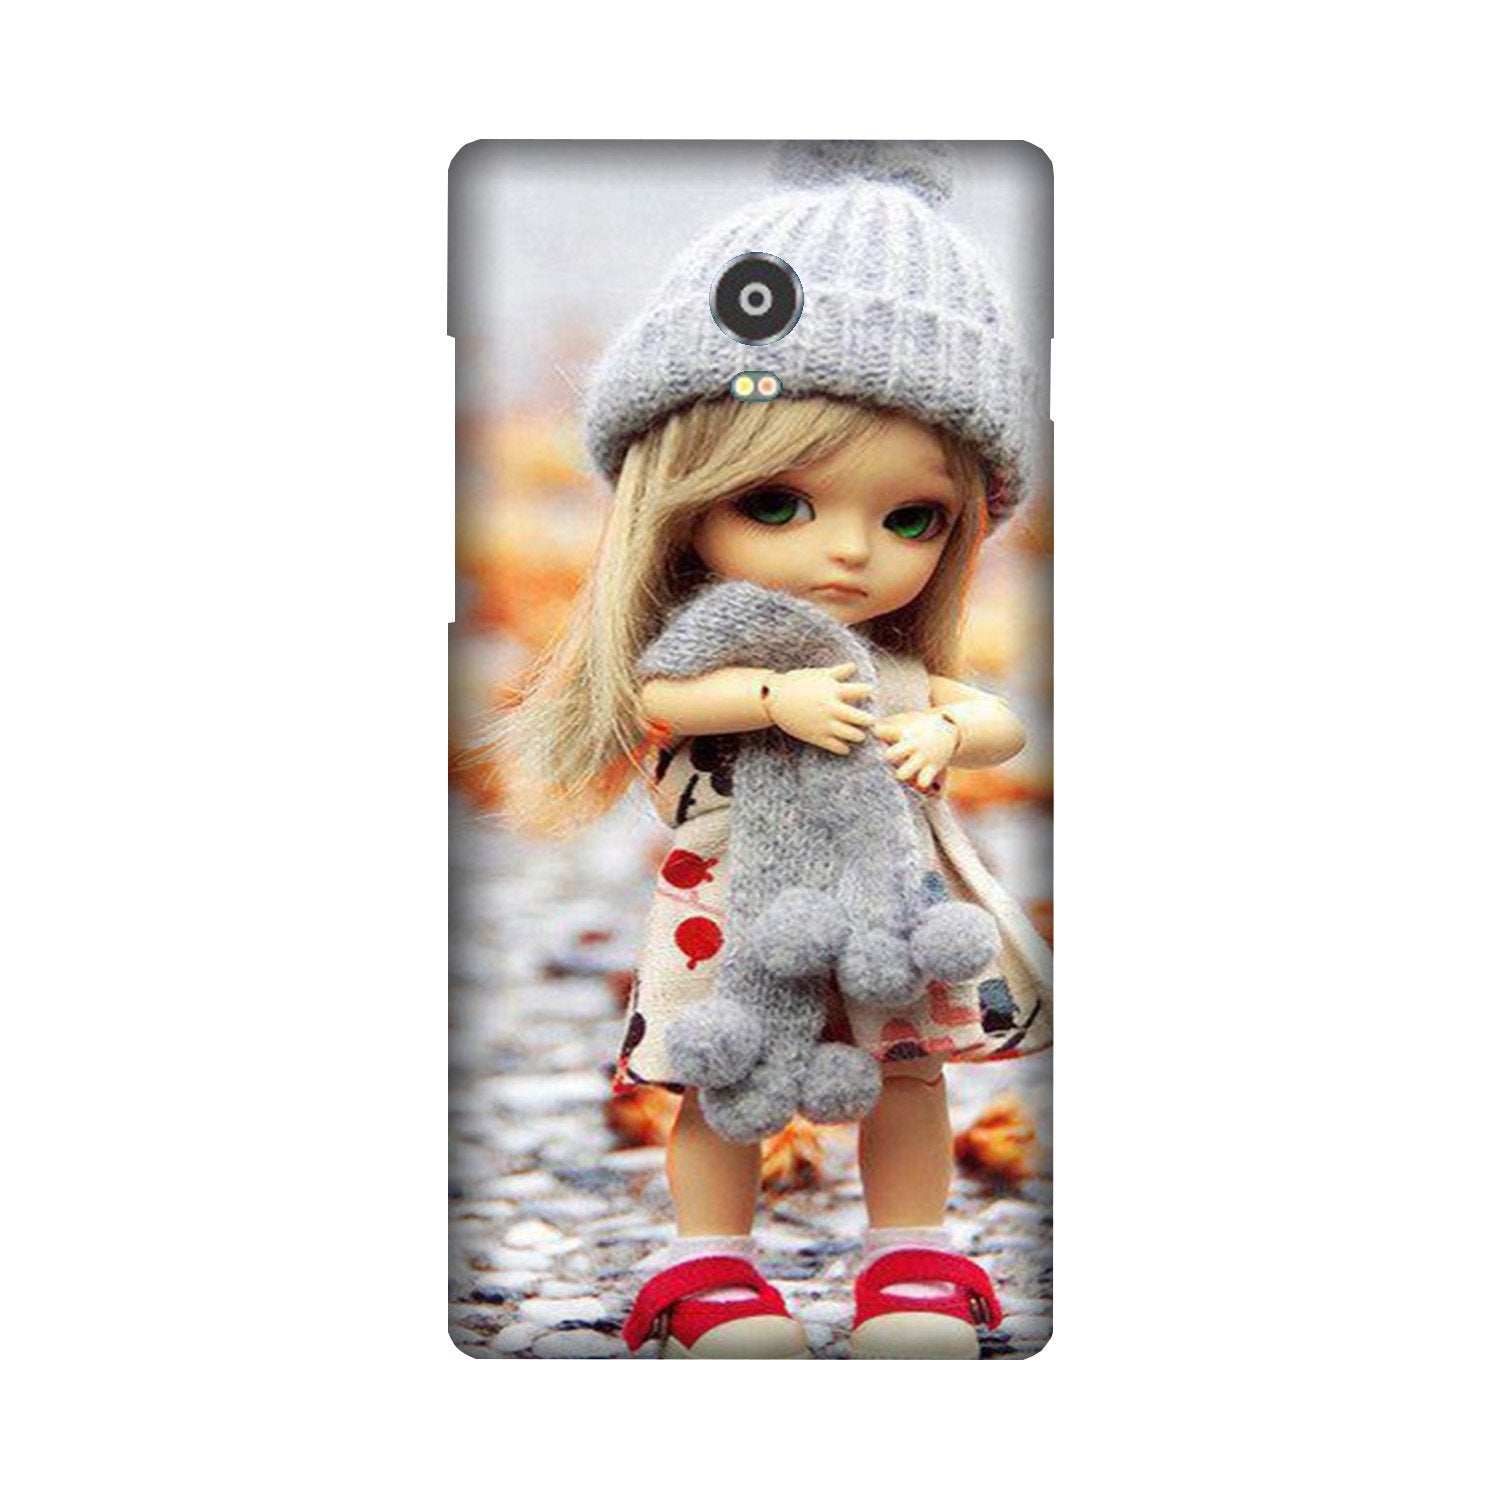 Cute Doll Case for Lenovo Vibe P1